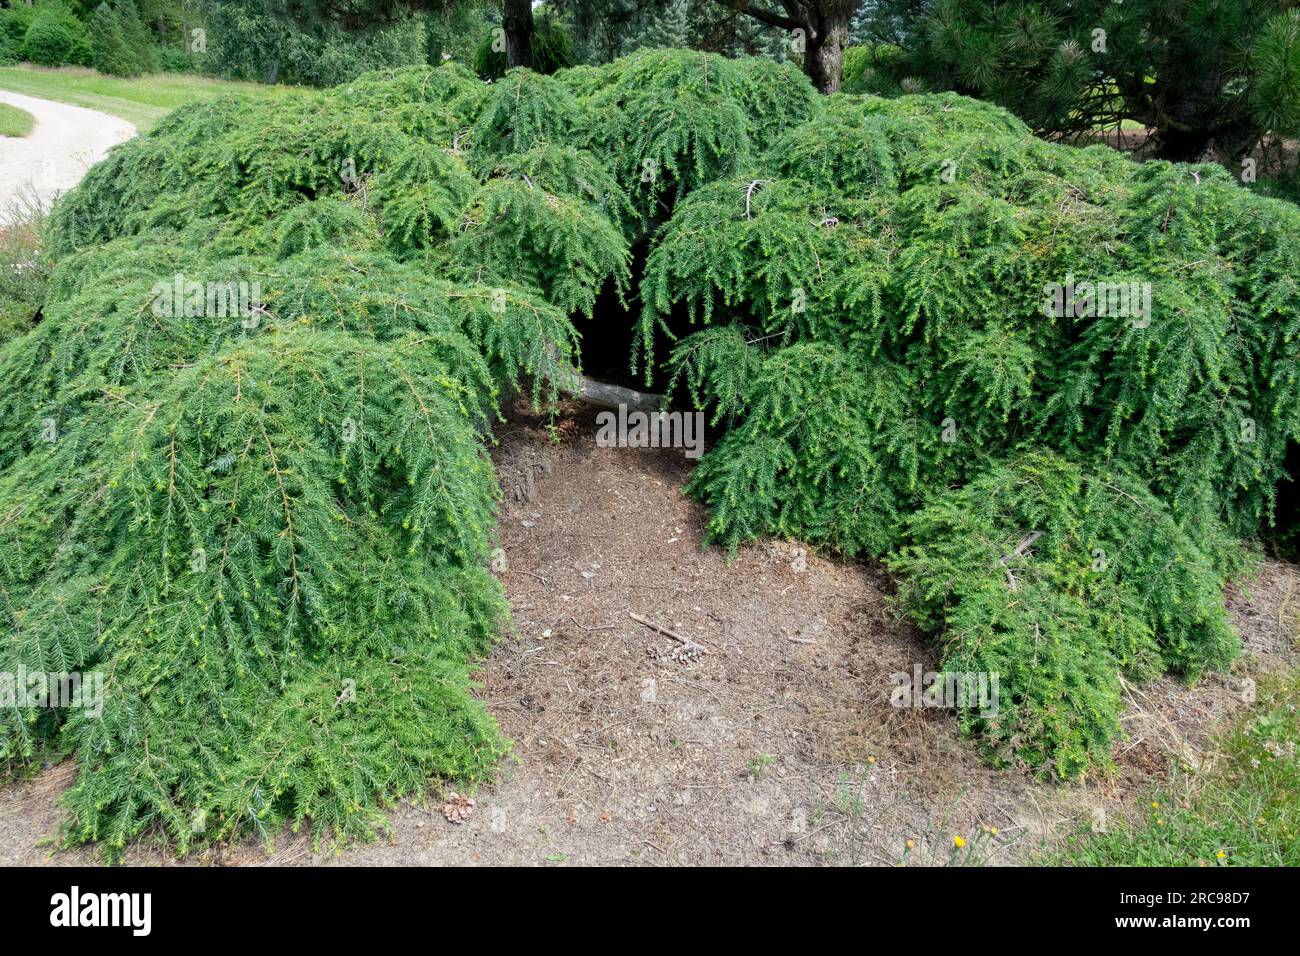 Weeping Hemlock, Tsuga canadensis 'Pendula', Canadian Hemlock, Prostrate growth Tree, Garden Stock Photo